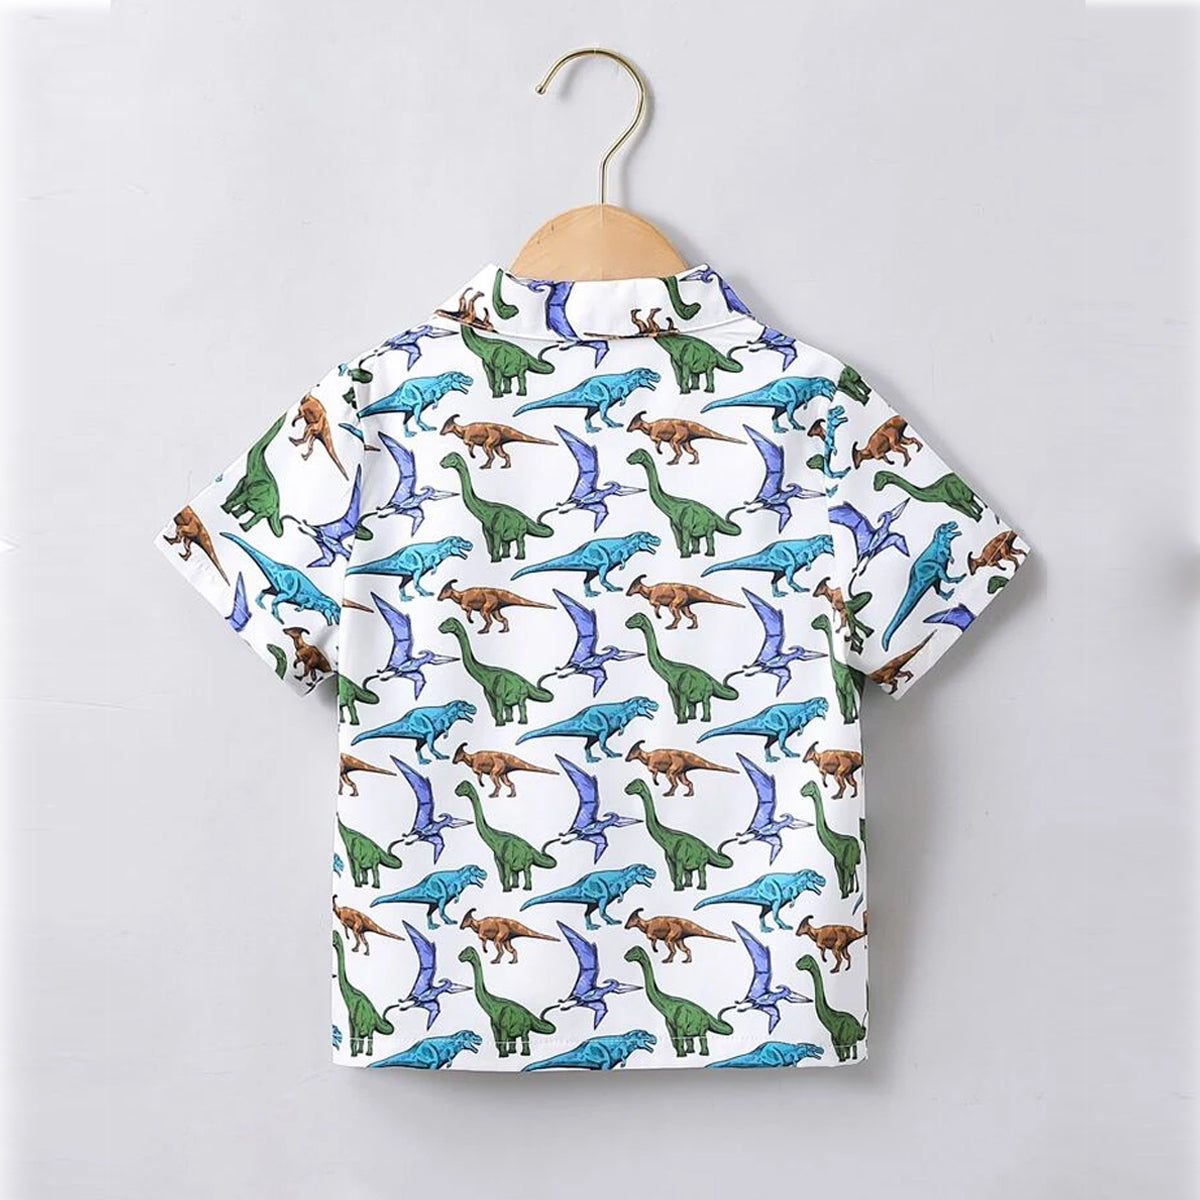 Venutaloza Boy's Dinosaur Designer Button Front Shirt For Boy.